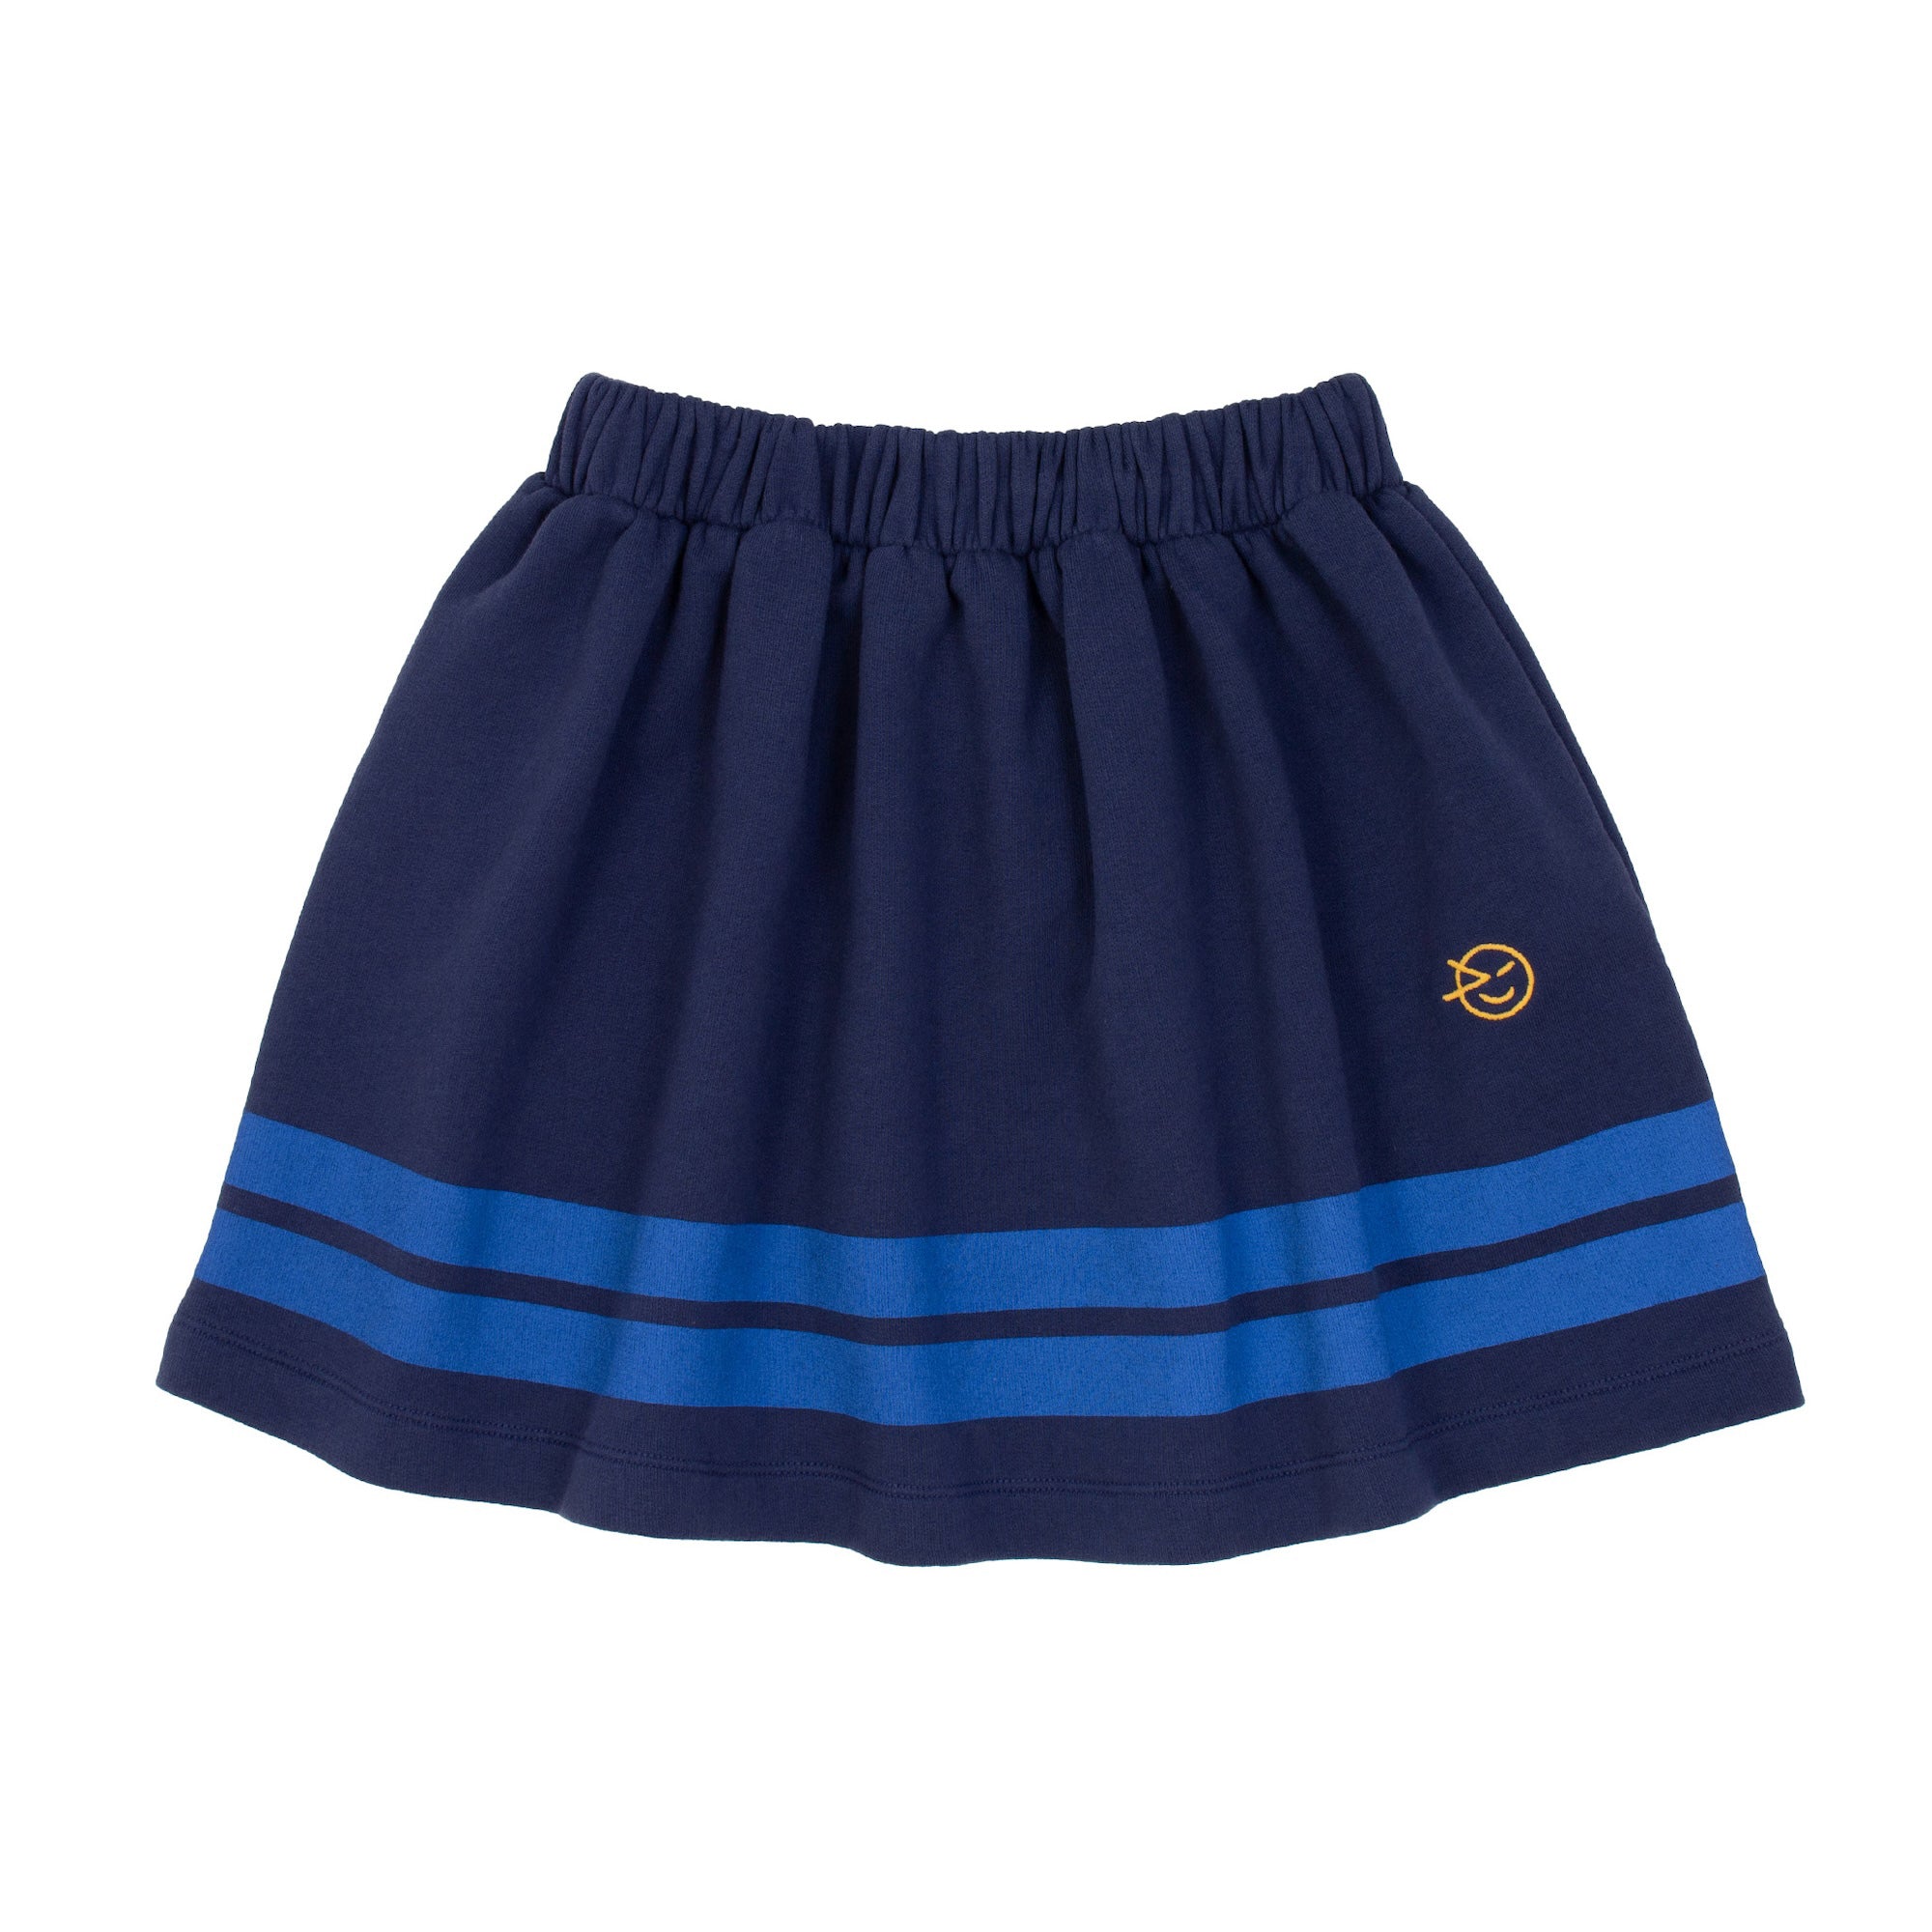 Vela Wynken Skirt - Navy